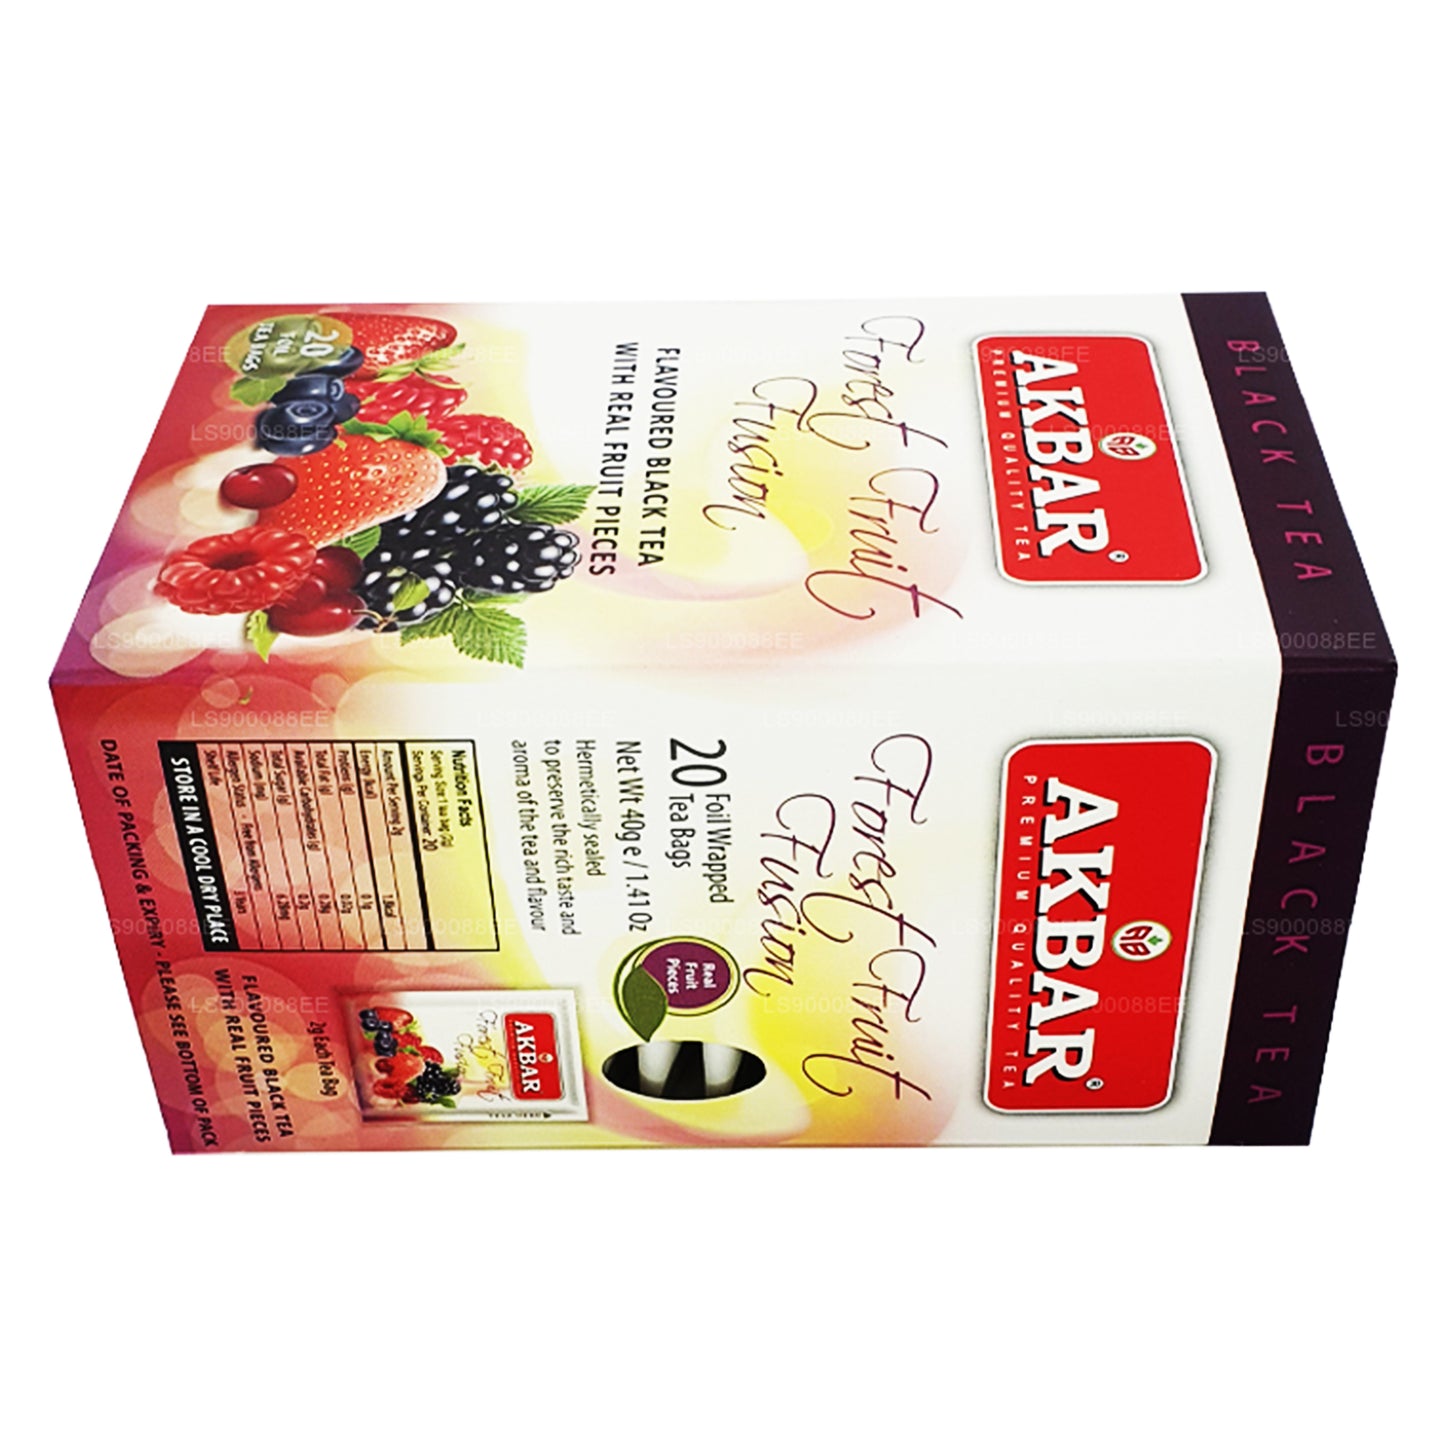 Akbar Forest Fruit Fusion (40 g) 20 bolsitas de té